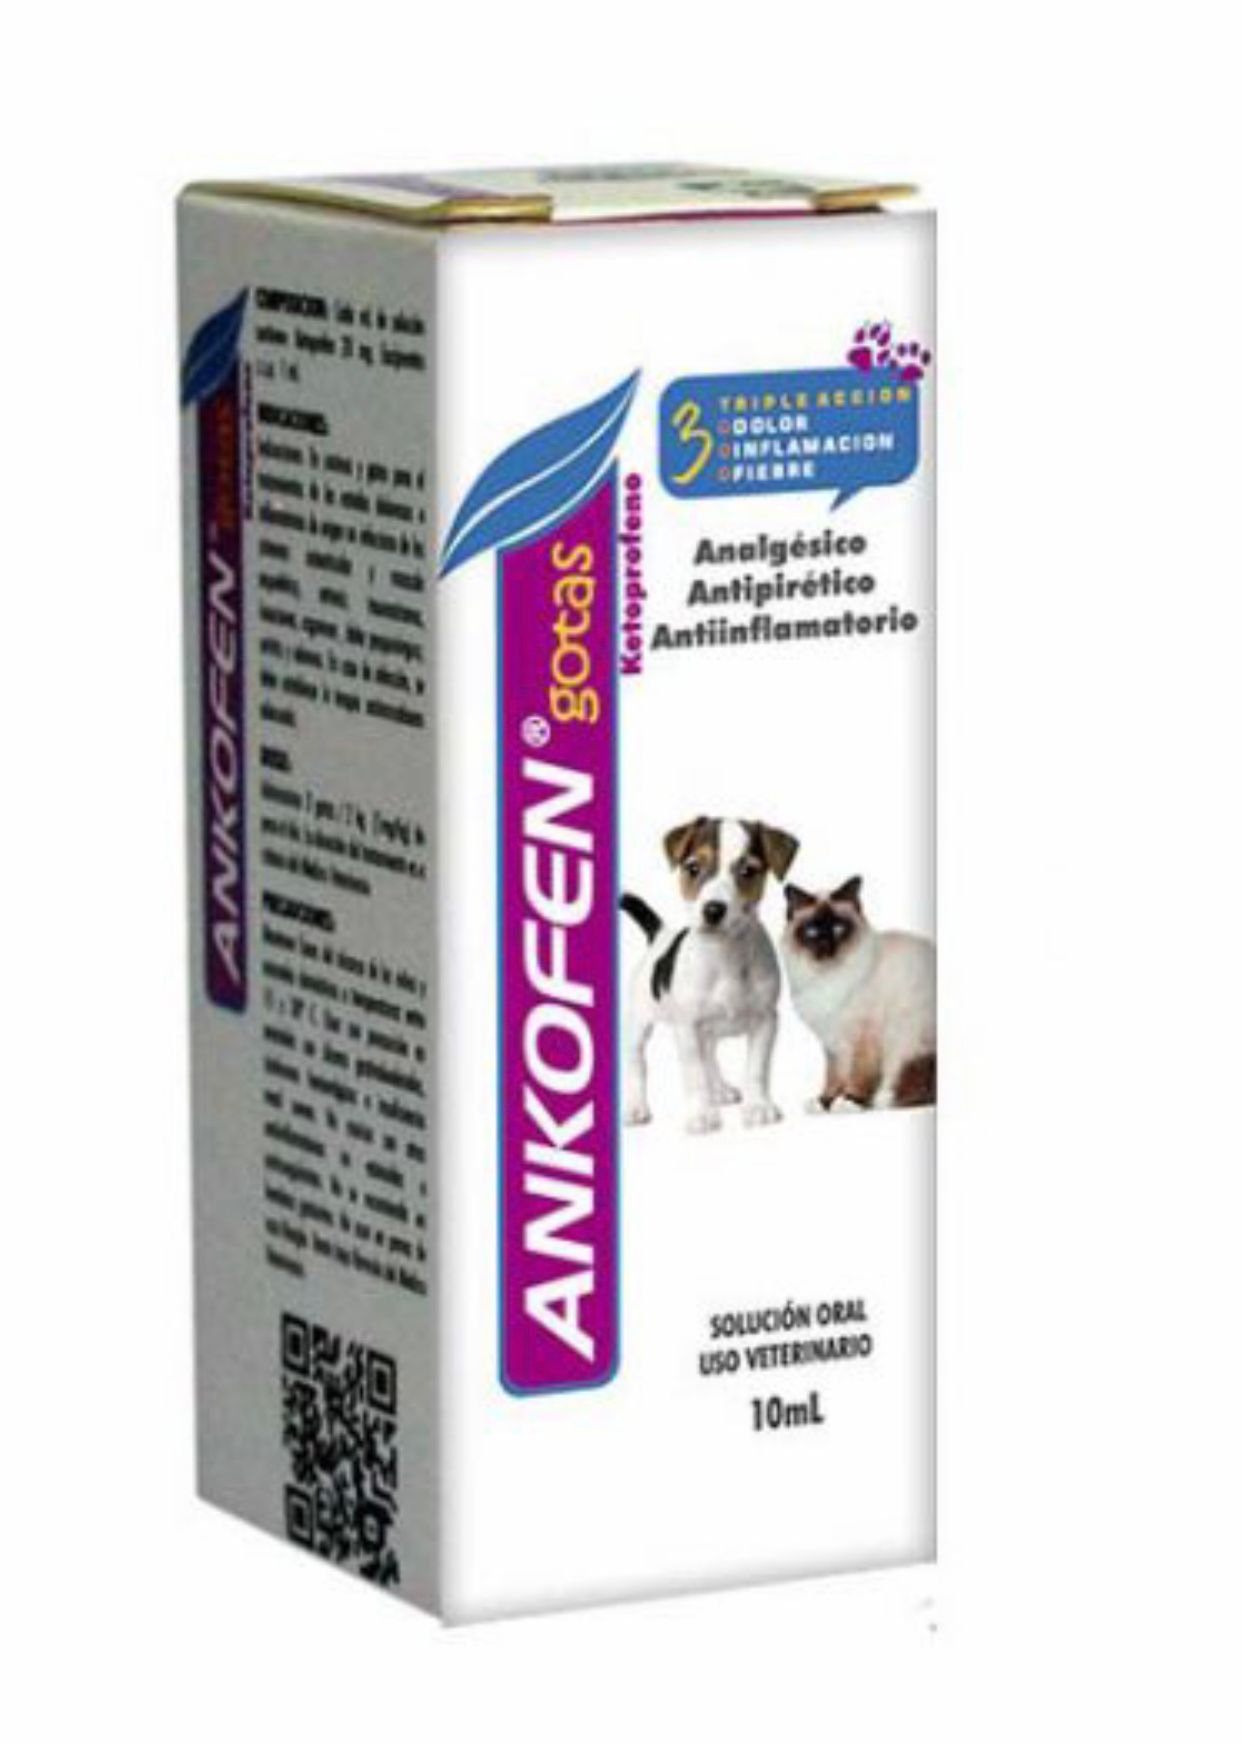 Antinflamatorio Ankofen - Gotas X 10ML